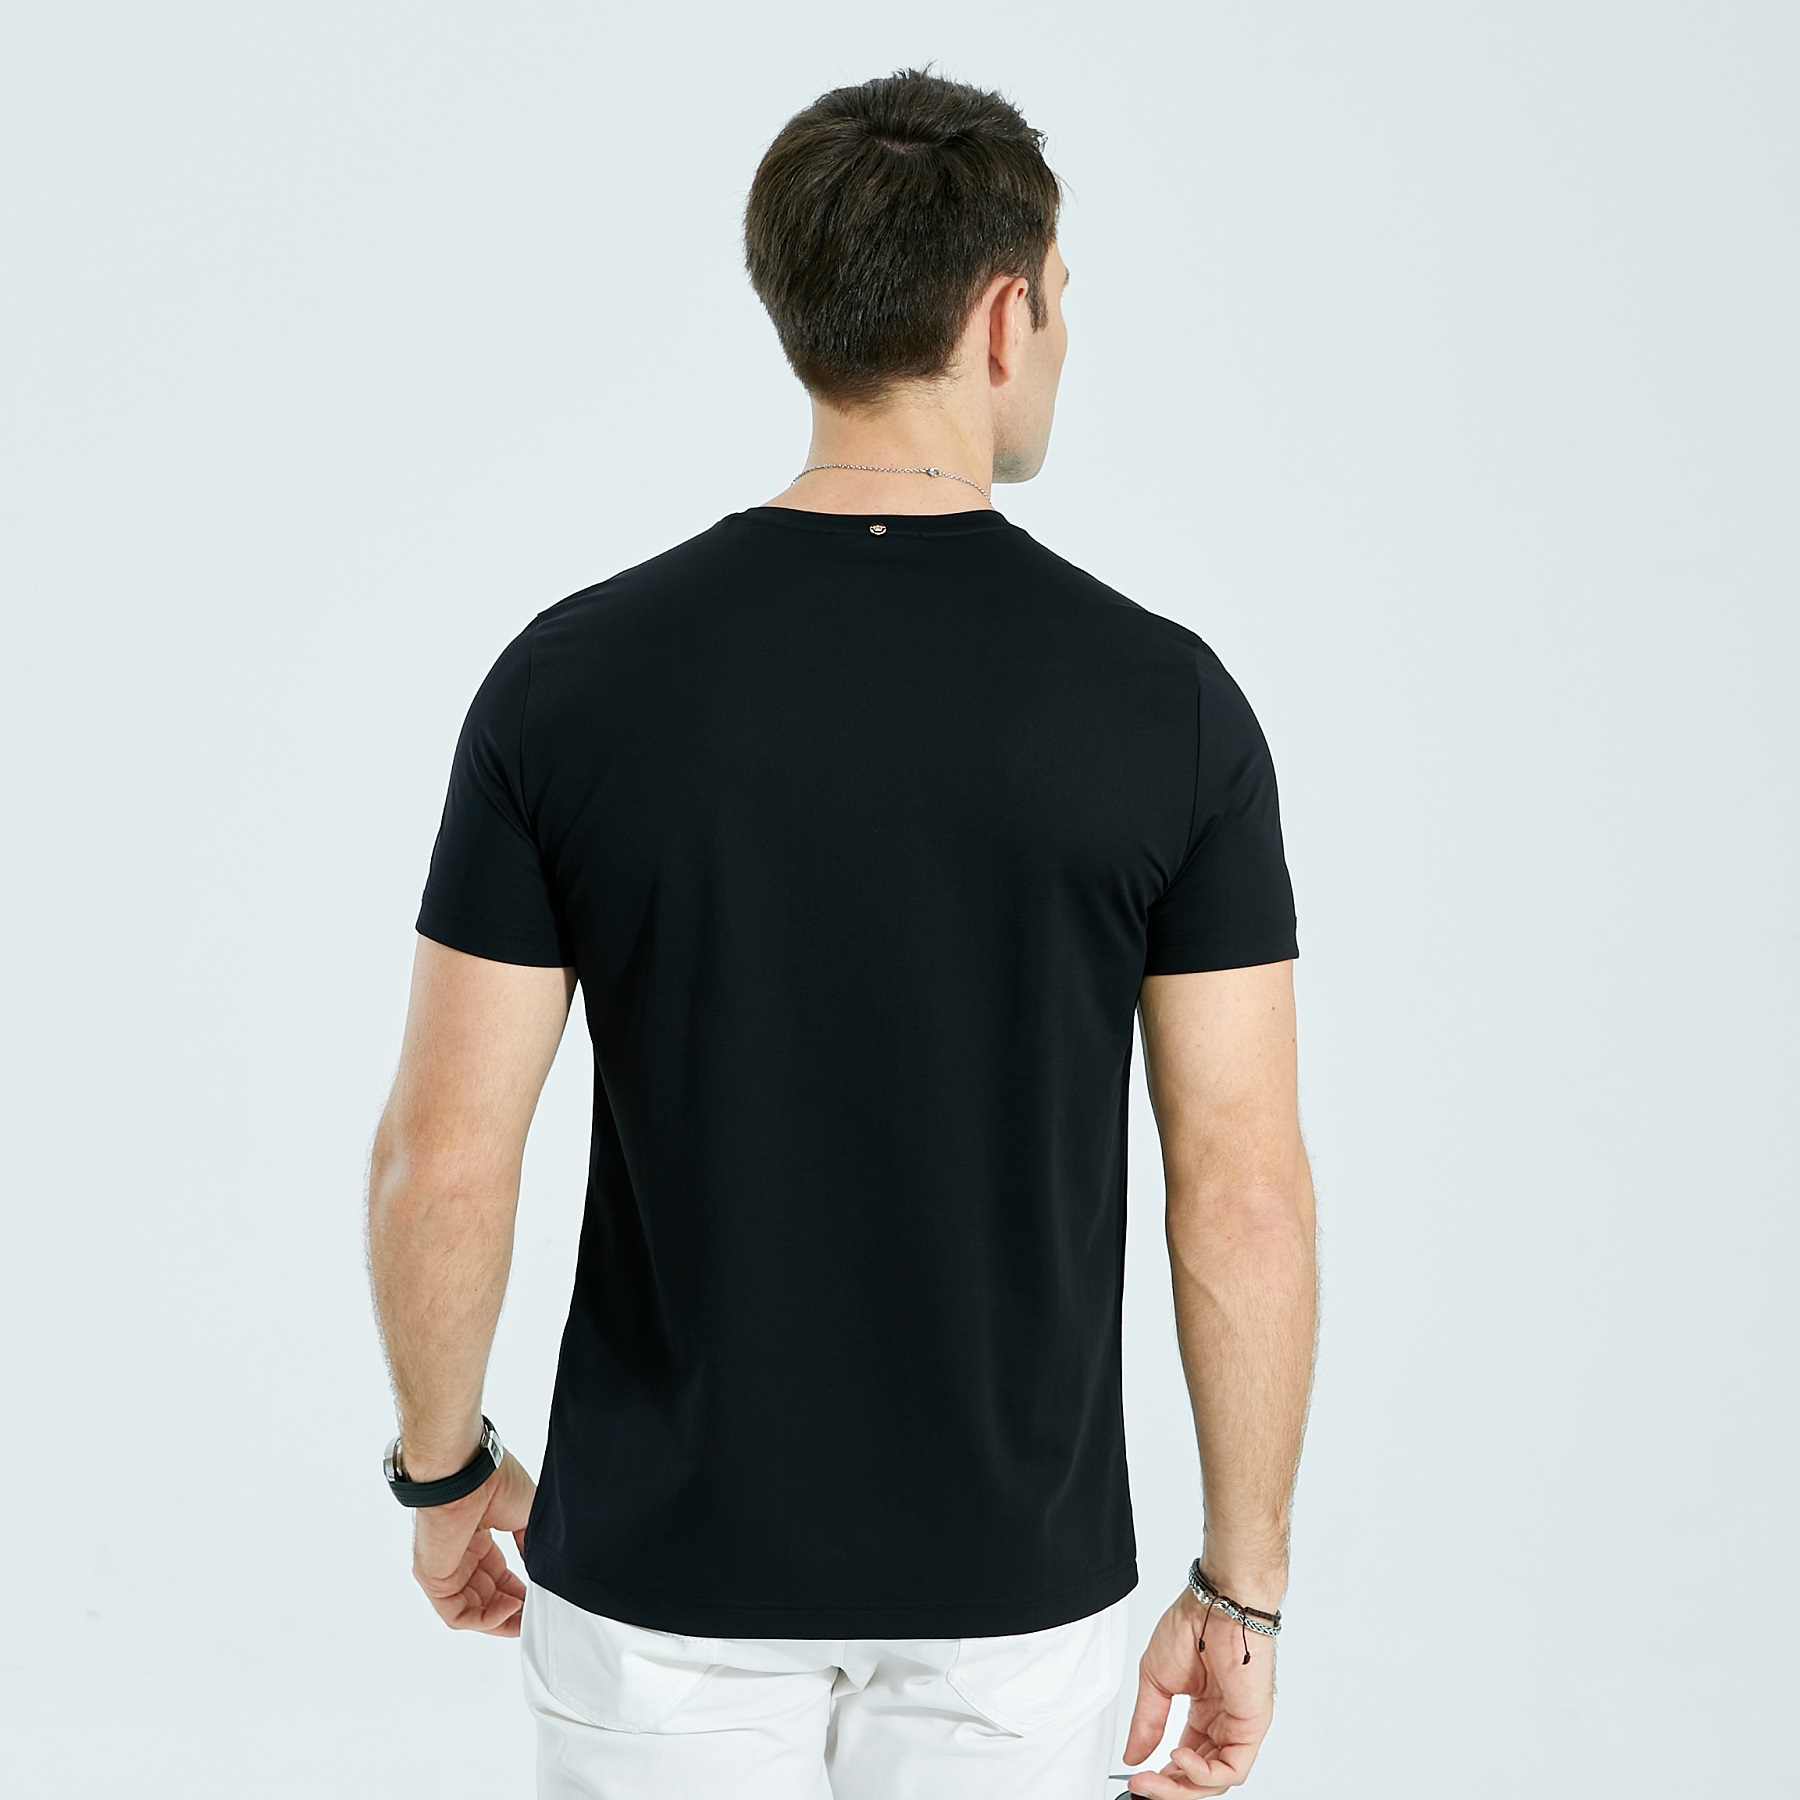 Wholesale Customized 100% Cotton Quick Dry T-Shirt